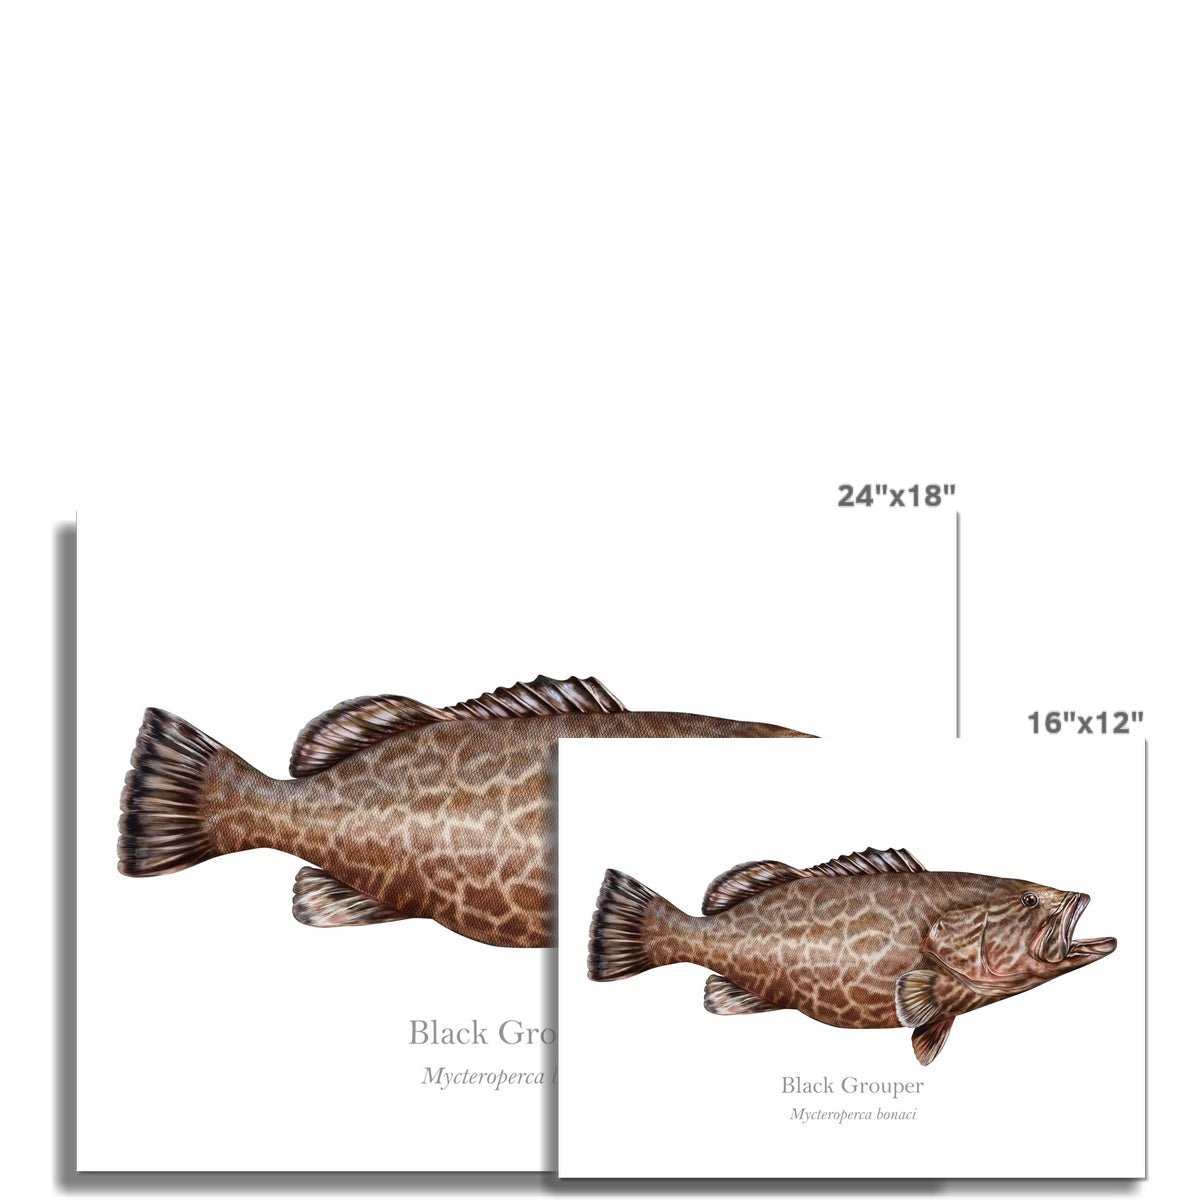 Black Grouper - Art Print - With Scientific Name - madfishlab.com